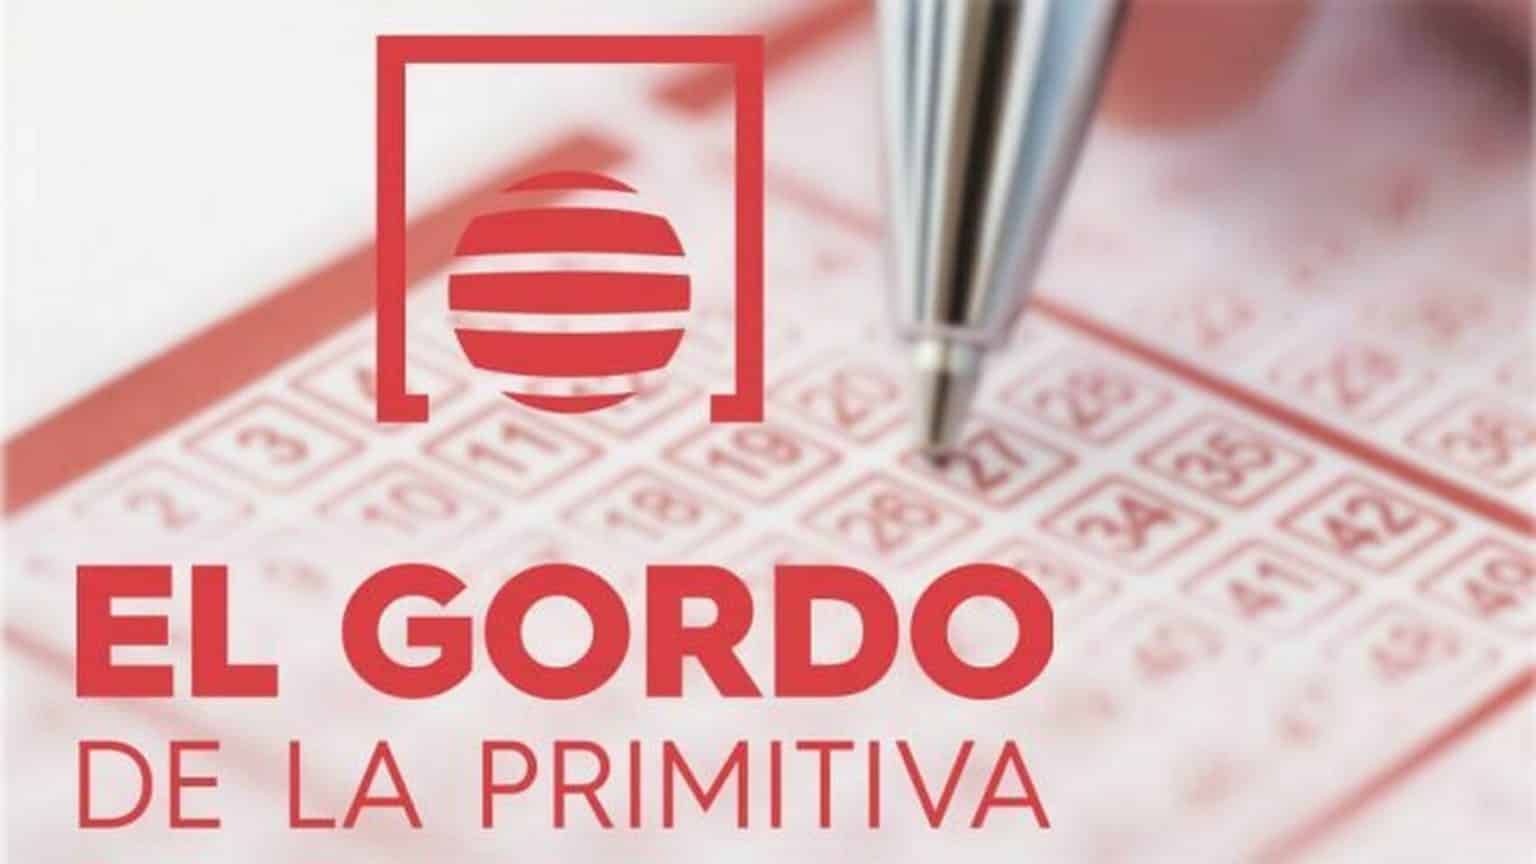 El Gordo de la Primitiva Results, Prize Breakdown, and Lottery Winning